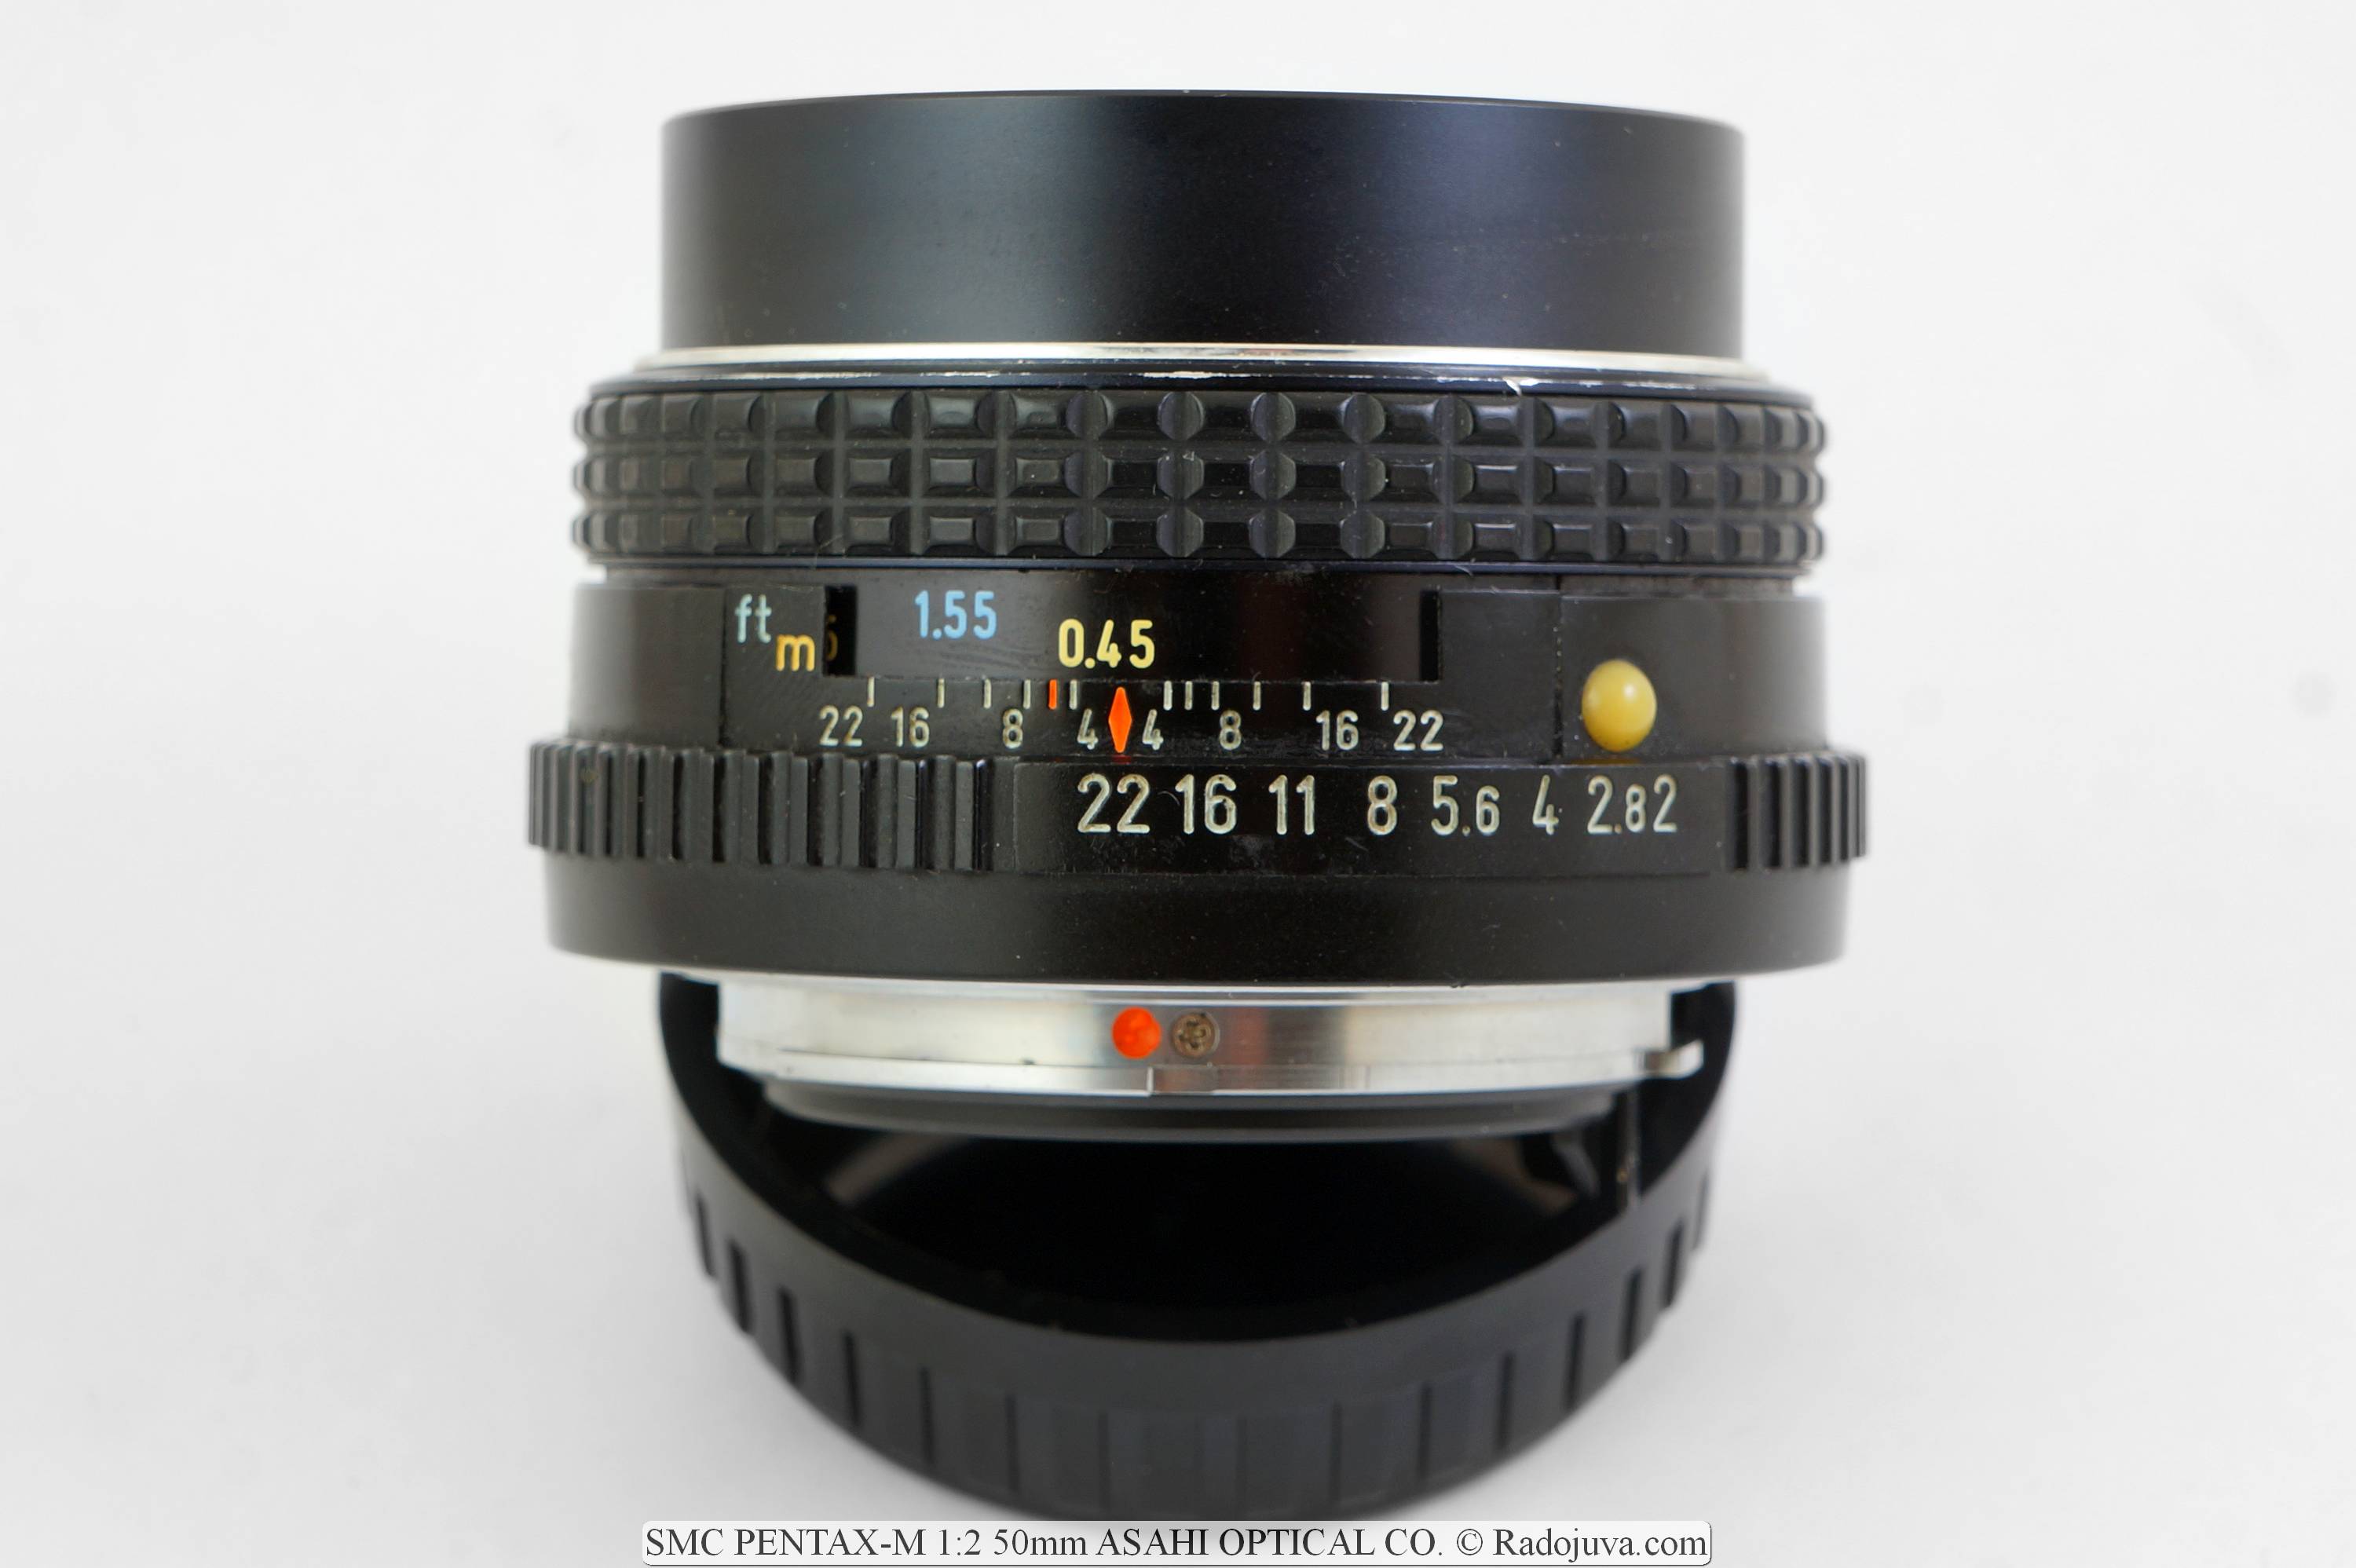 SMC PENTAX-M 1:2 50mm ASAHI OPTICAL CO.